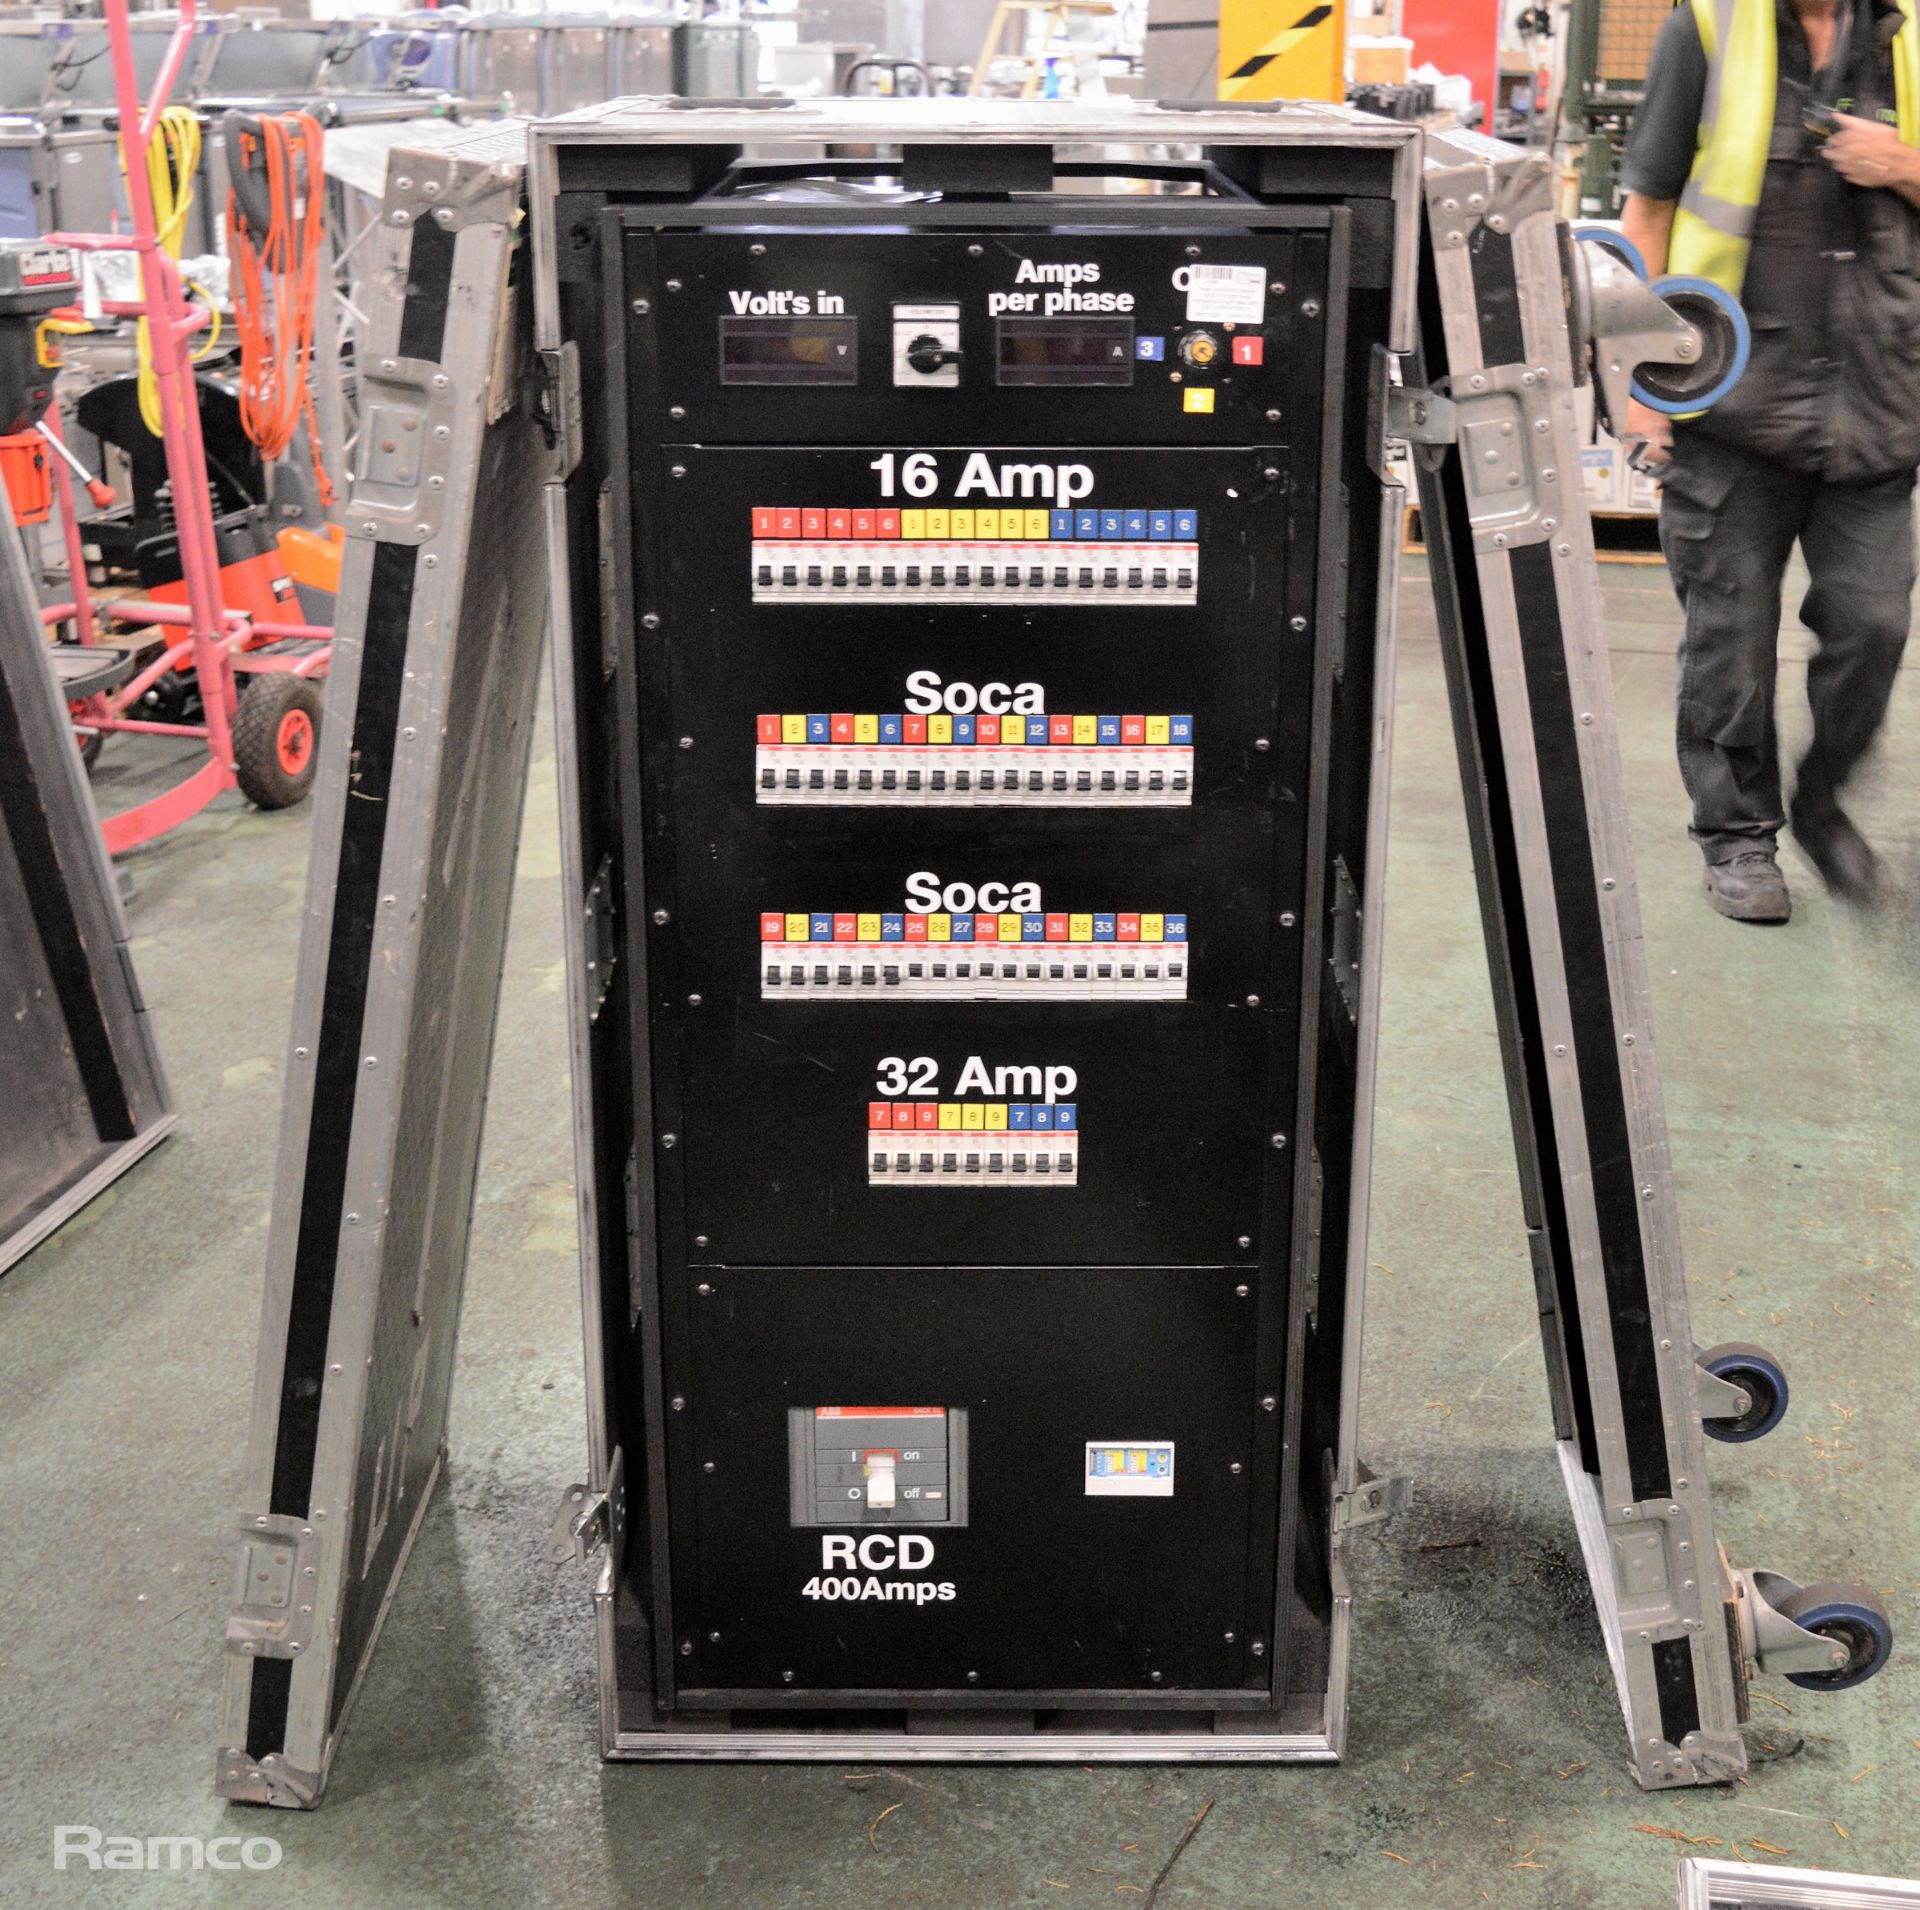 Power distribution cabinet 16/32 Amp with Soca connectors & flight case 240V, L62 x W86 x H130cm - Image 3 of 5